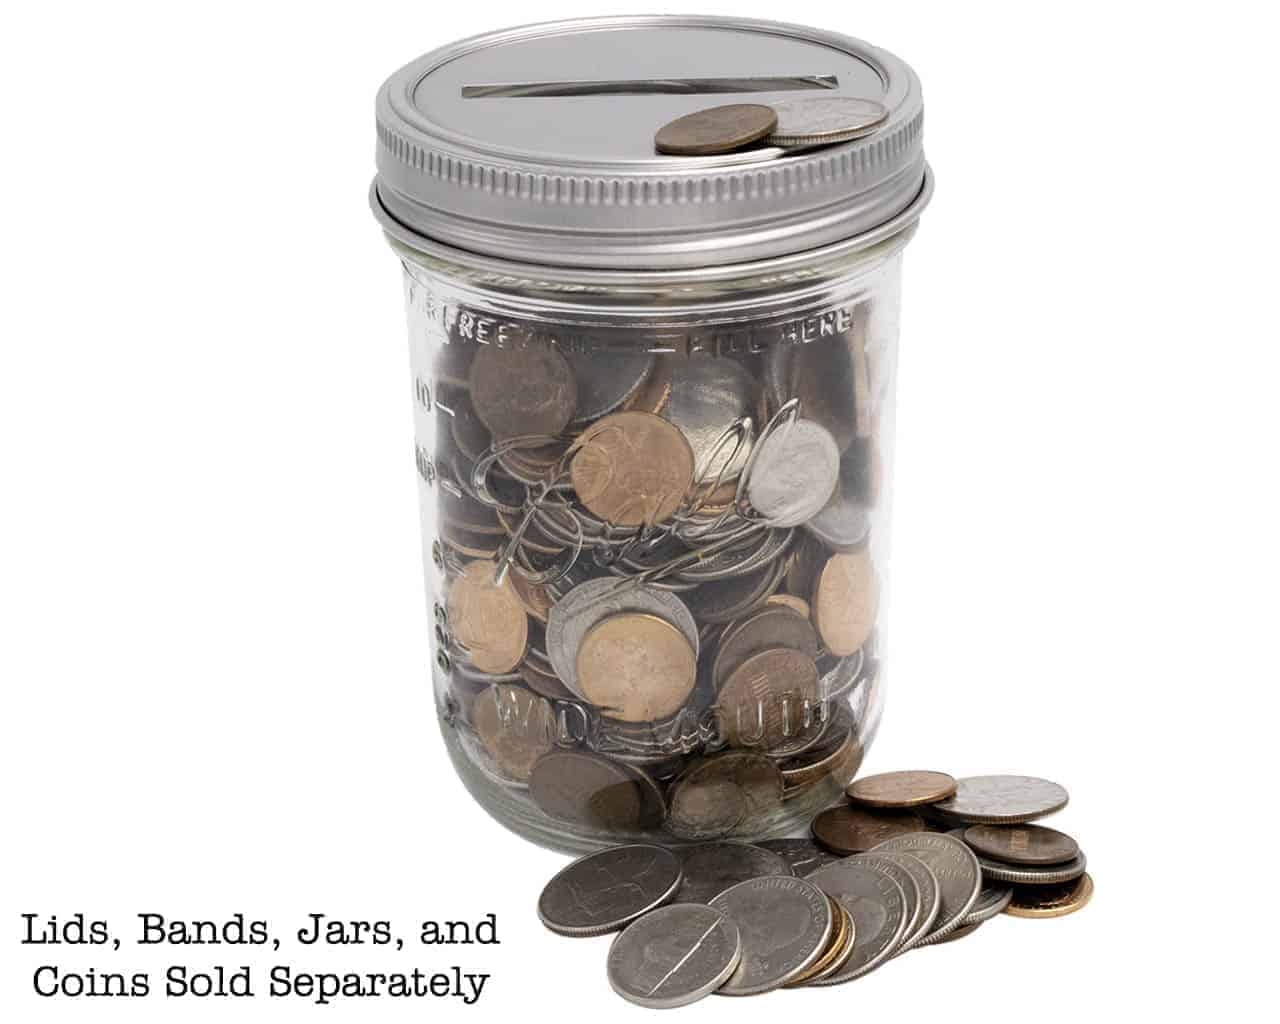 mason-jar-lifestyle-stainless-steel-coin-slot-bank-lid-insert-band-wide-mouth-pint-ball-mason-jar-money